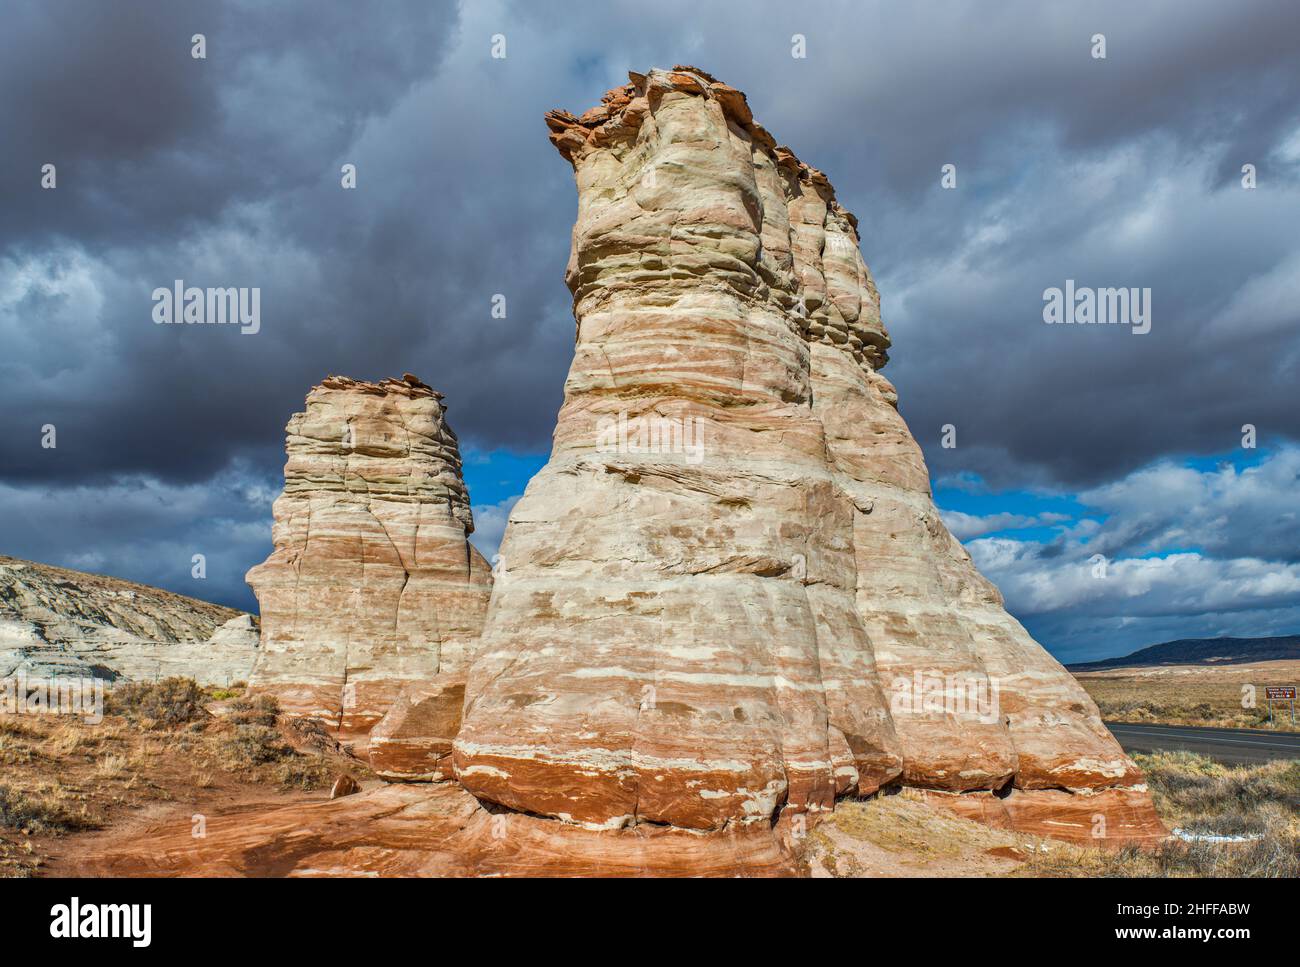 Elephant Feet, buttes in Red Lake Valley, Navajo Indian Reservation, near Tonalea, Arizona, USA Stock Photo